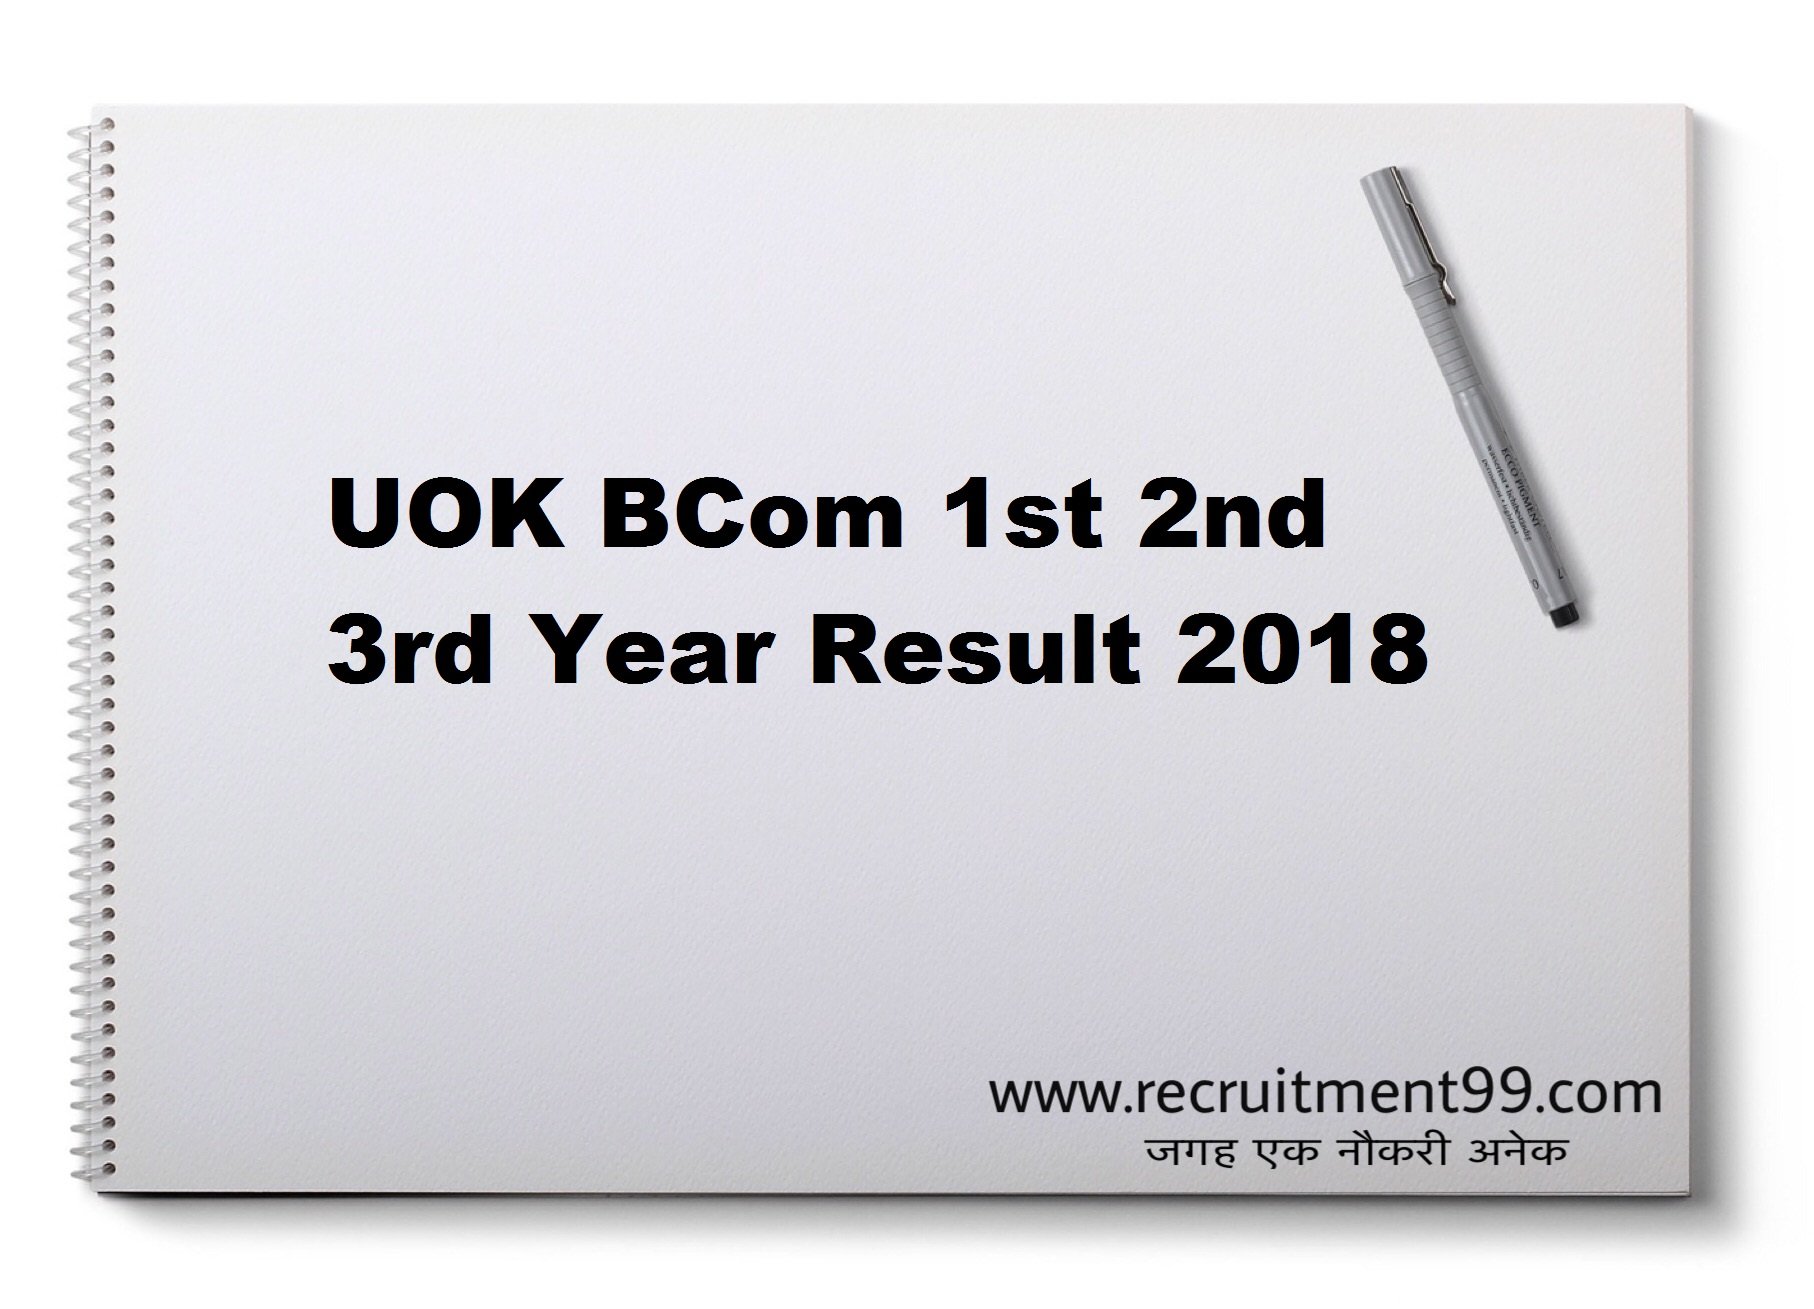 UOK BCom 1st 2nd 3rd Year Result 2018UOK BCom 1st 2nd 3rd Year Result 2018